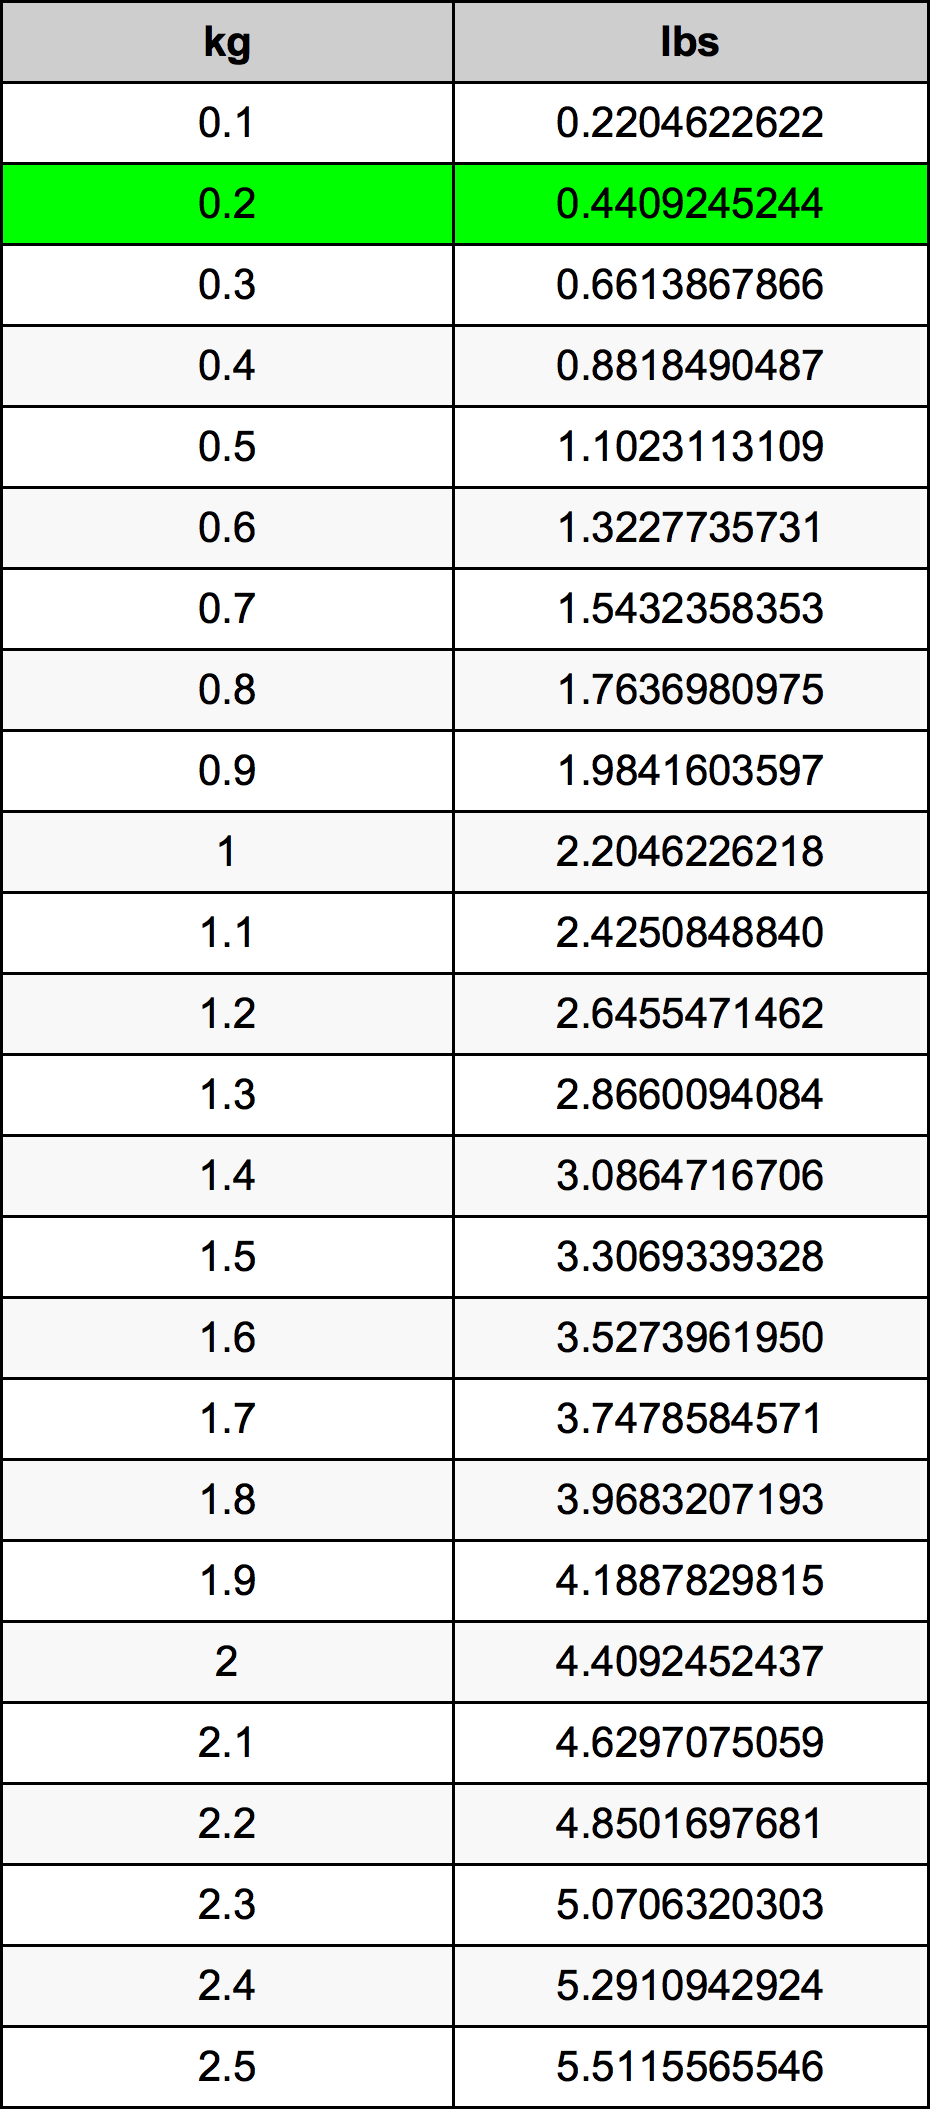 0.2 Kilogramma konverżjoni tabella